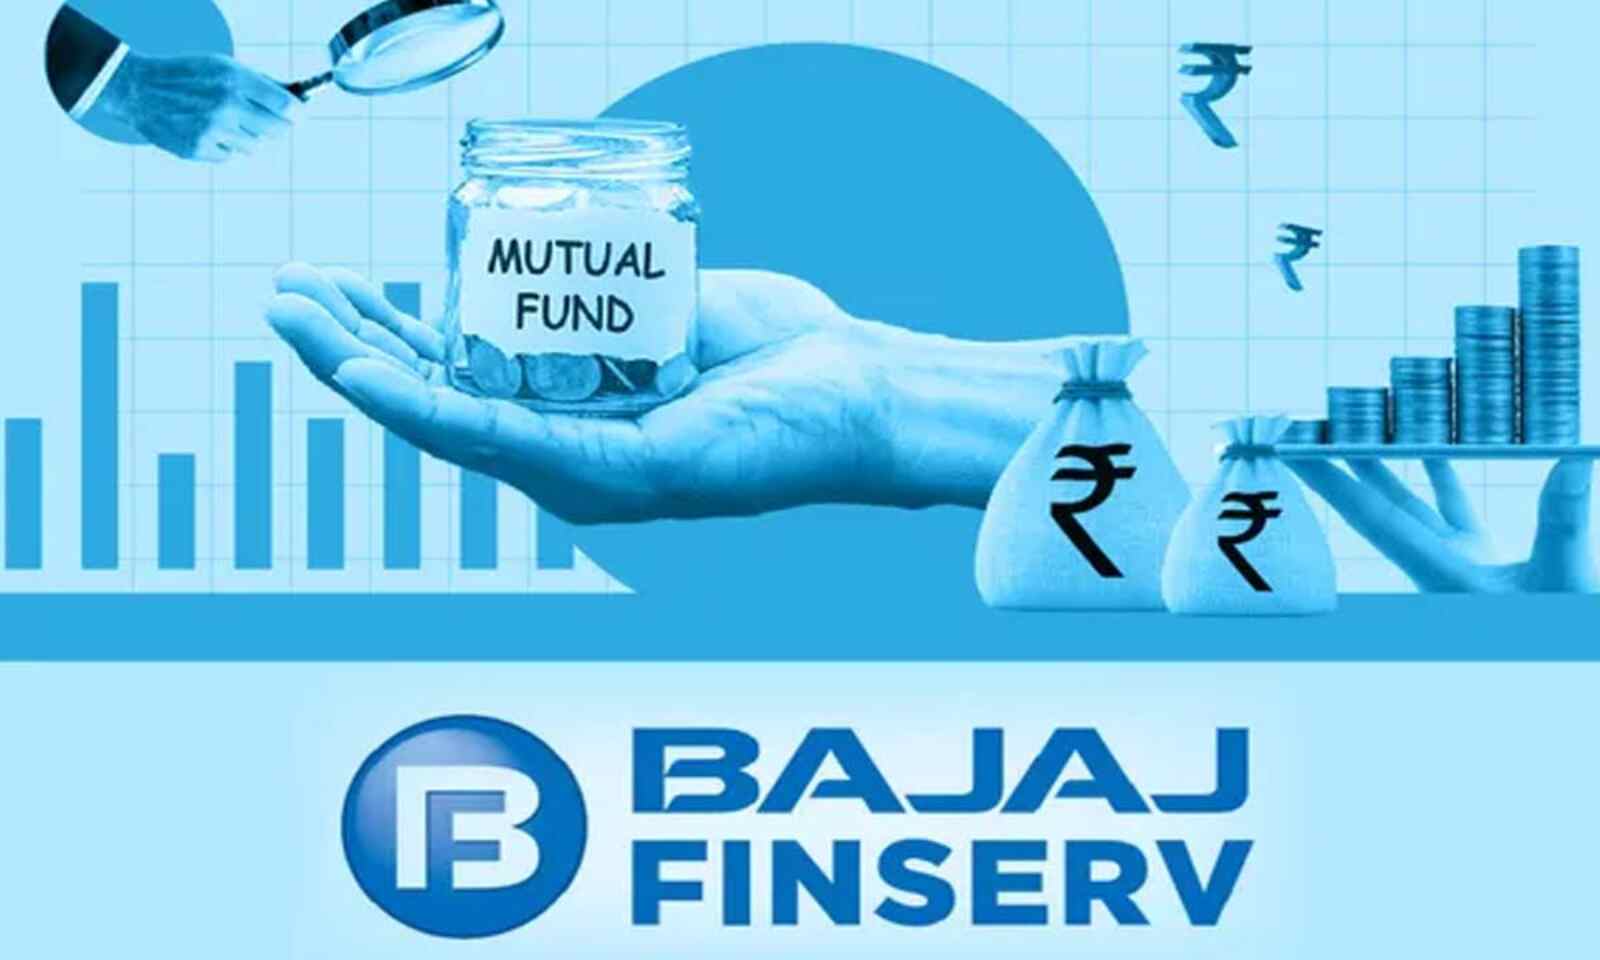 Bajaj Finance Share Price | Fundamental Analysis